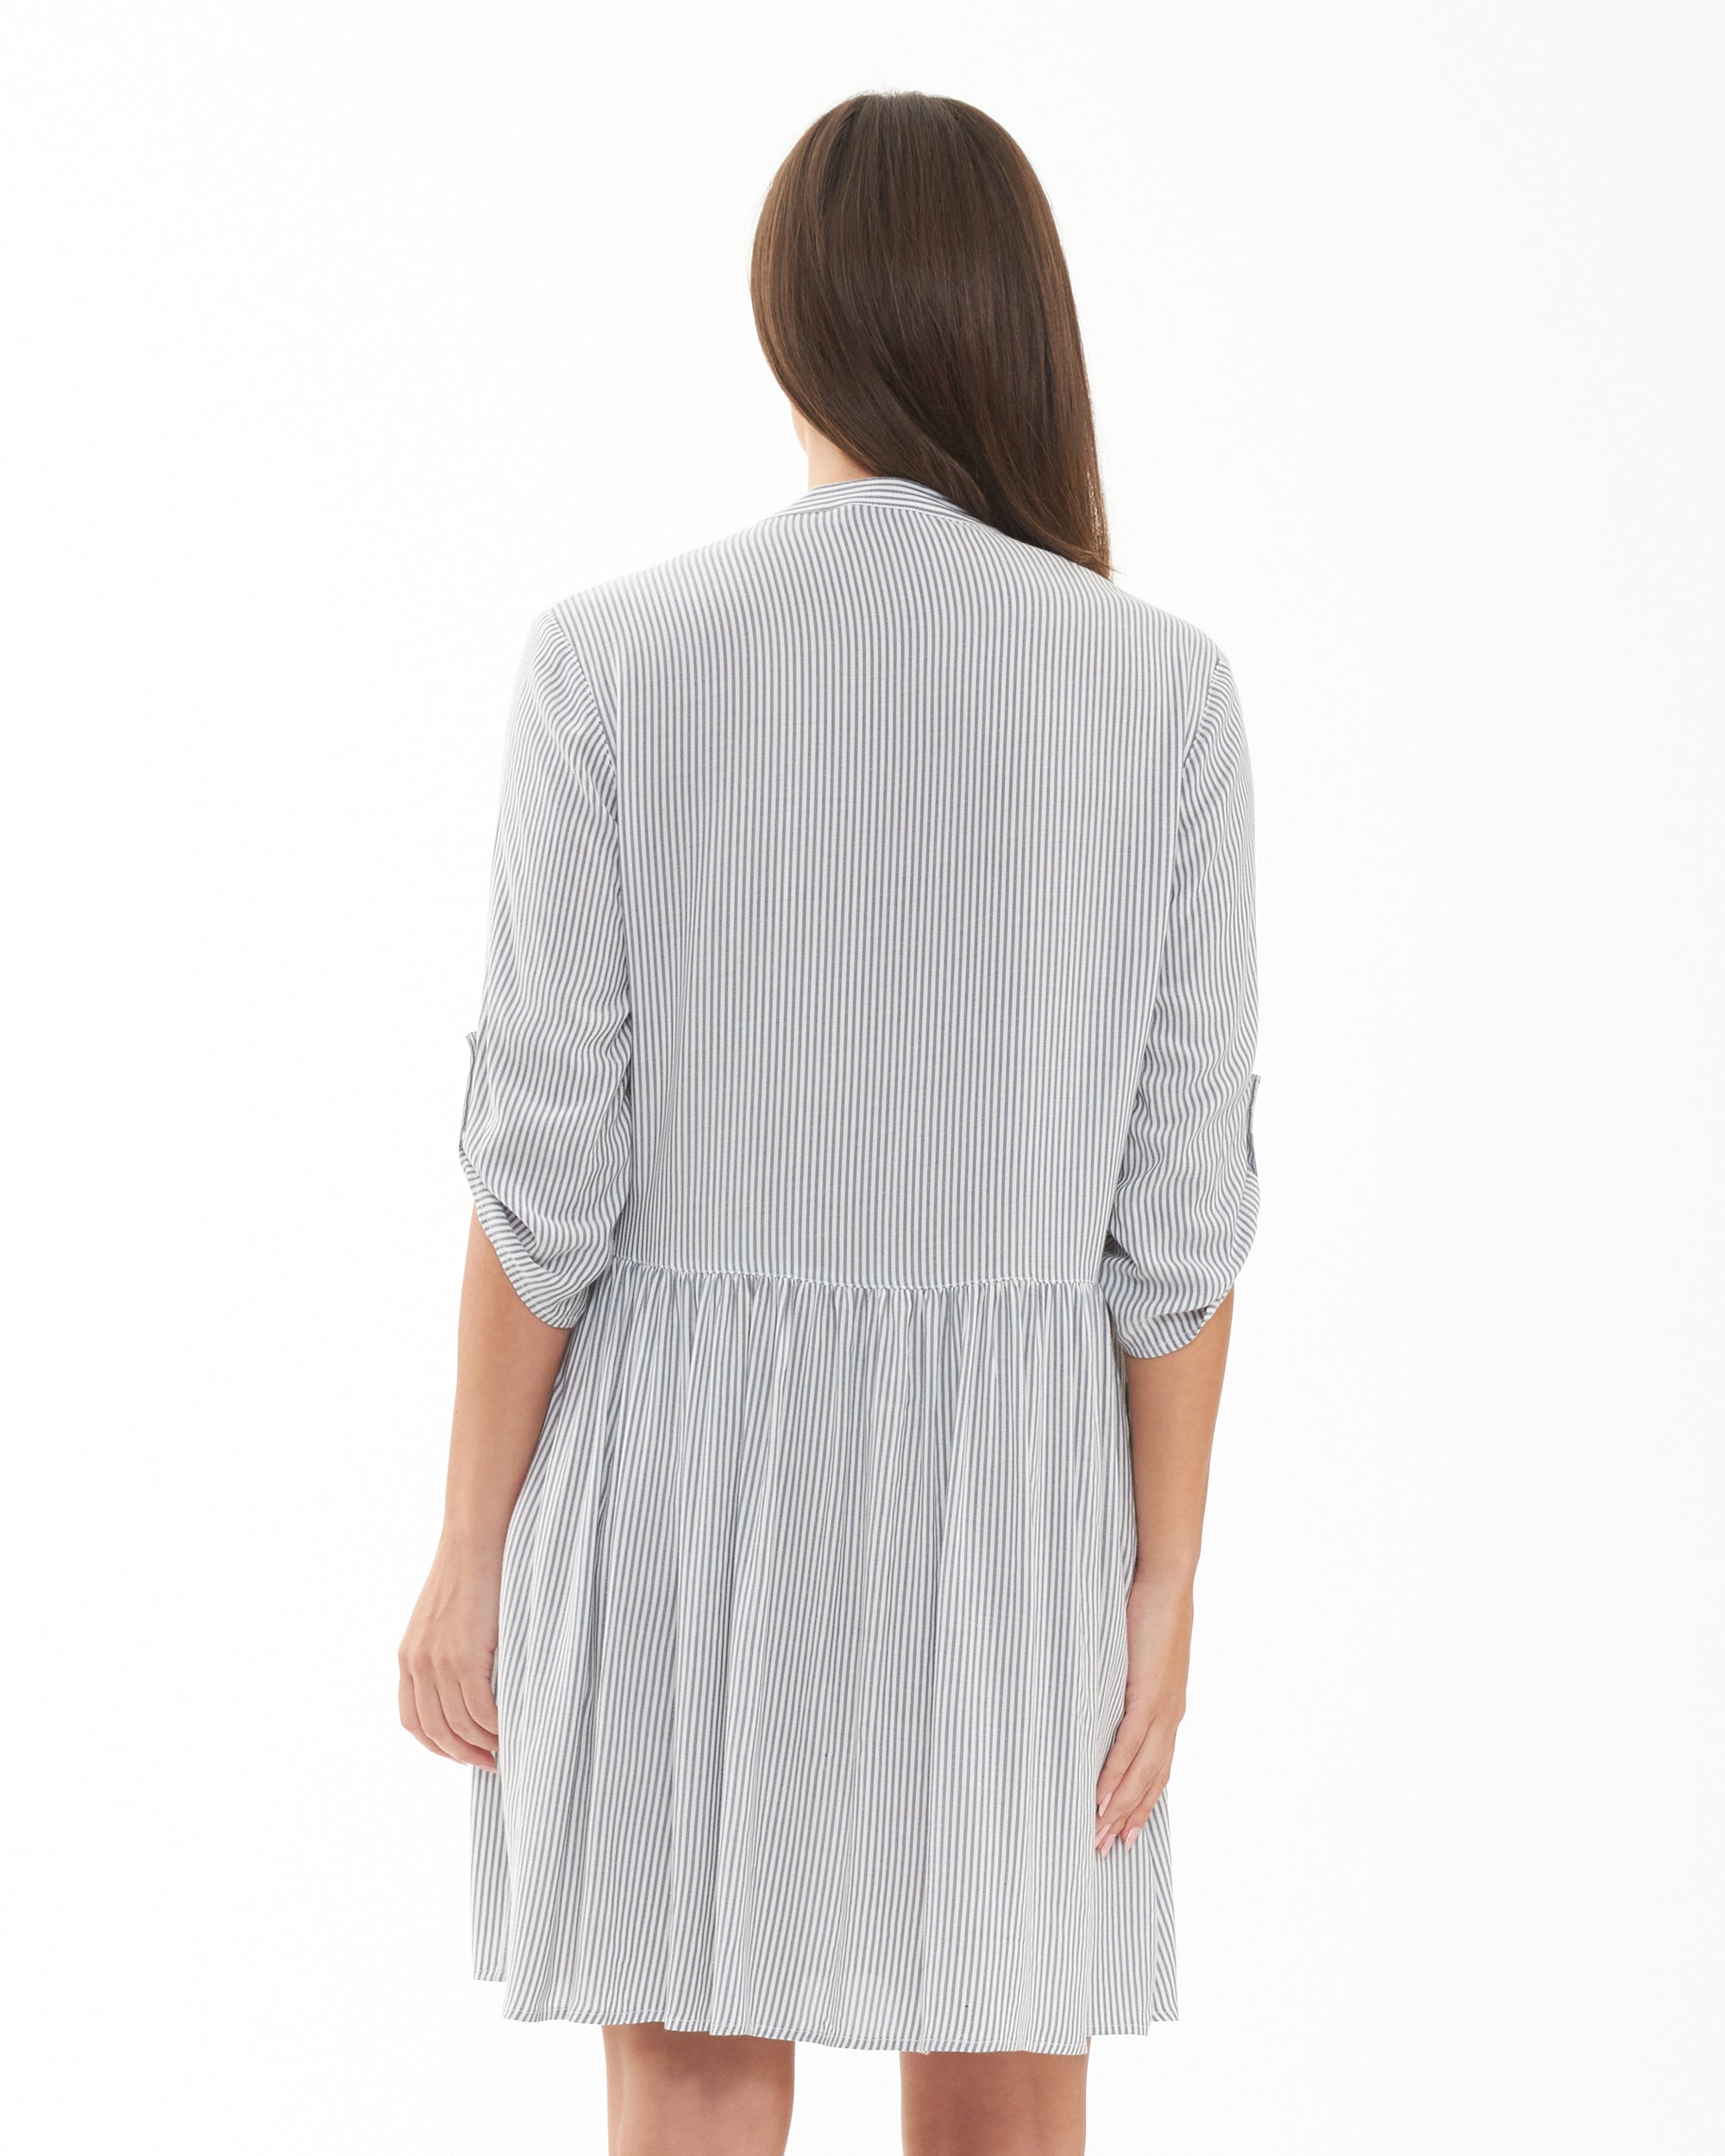 Sam Stripe Dress  Slate / White